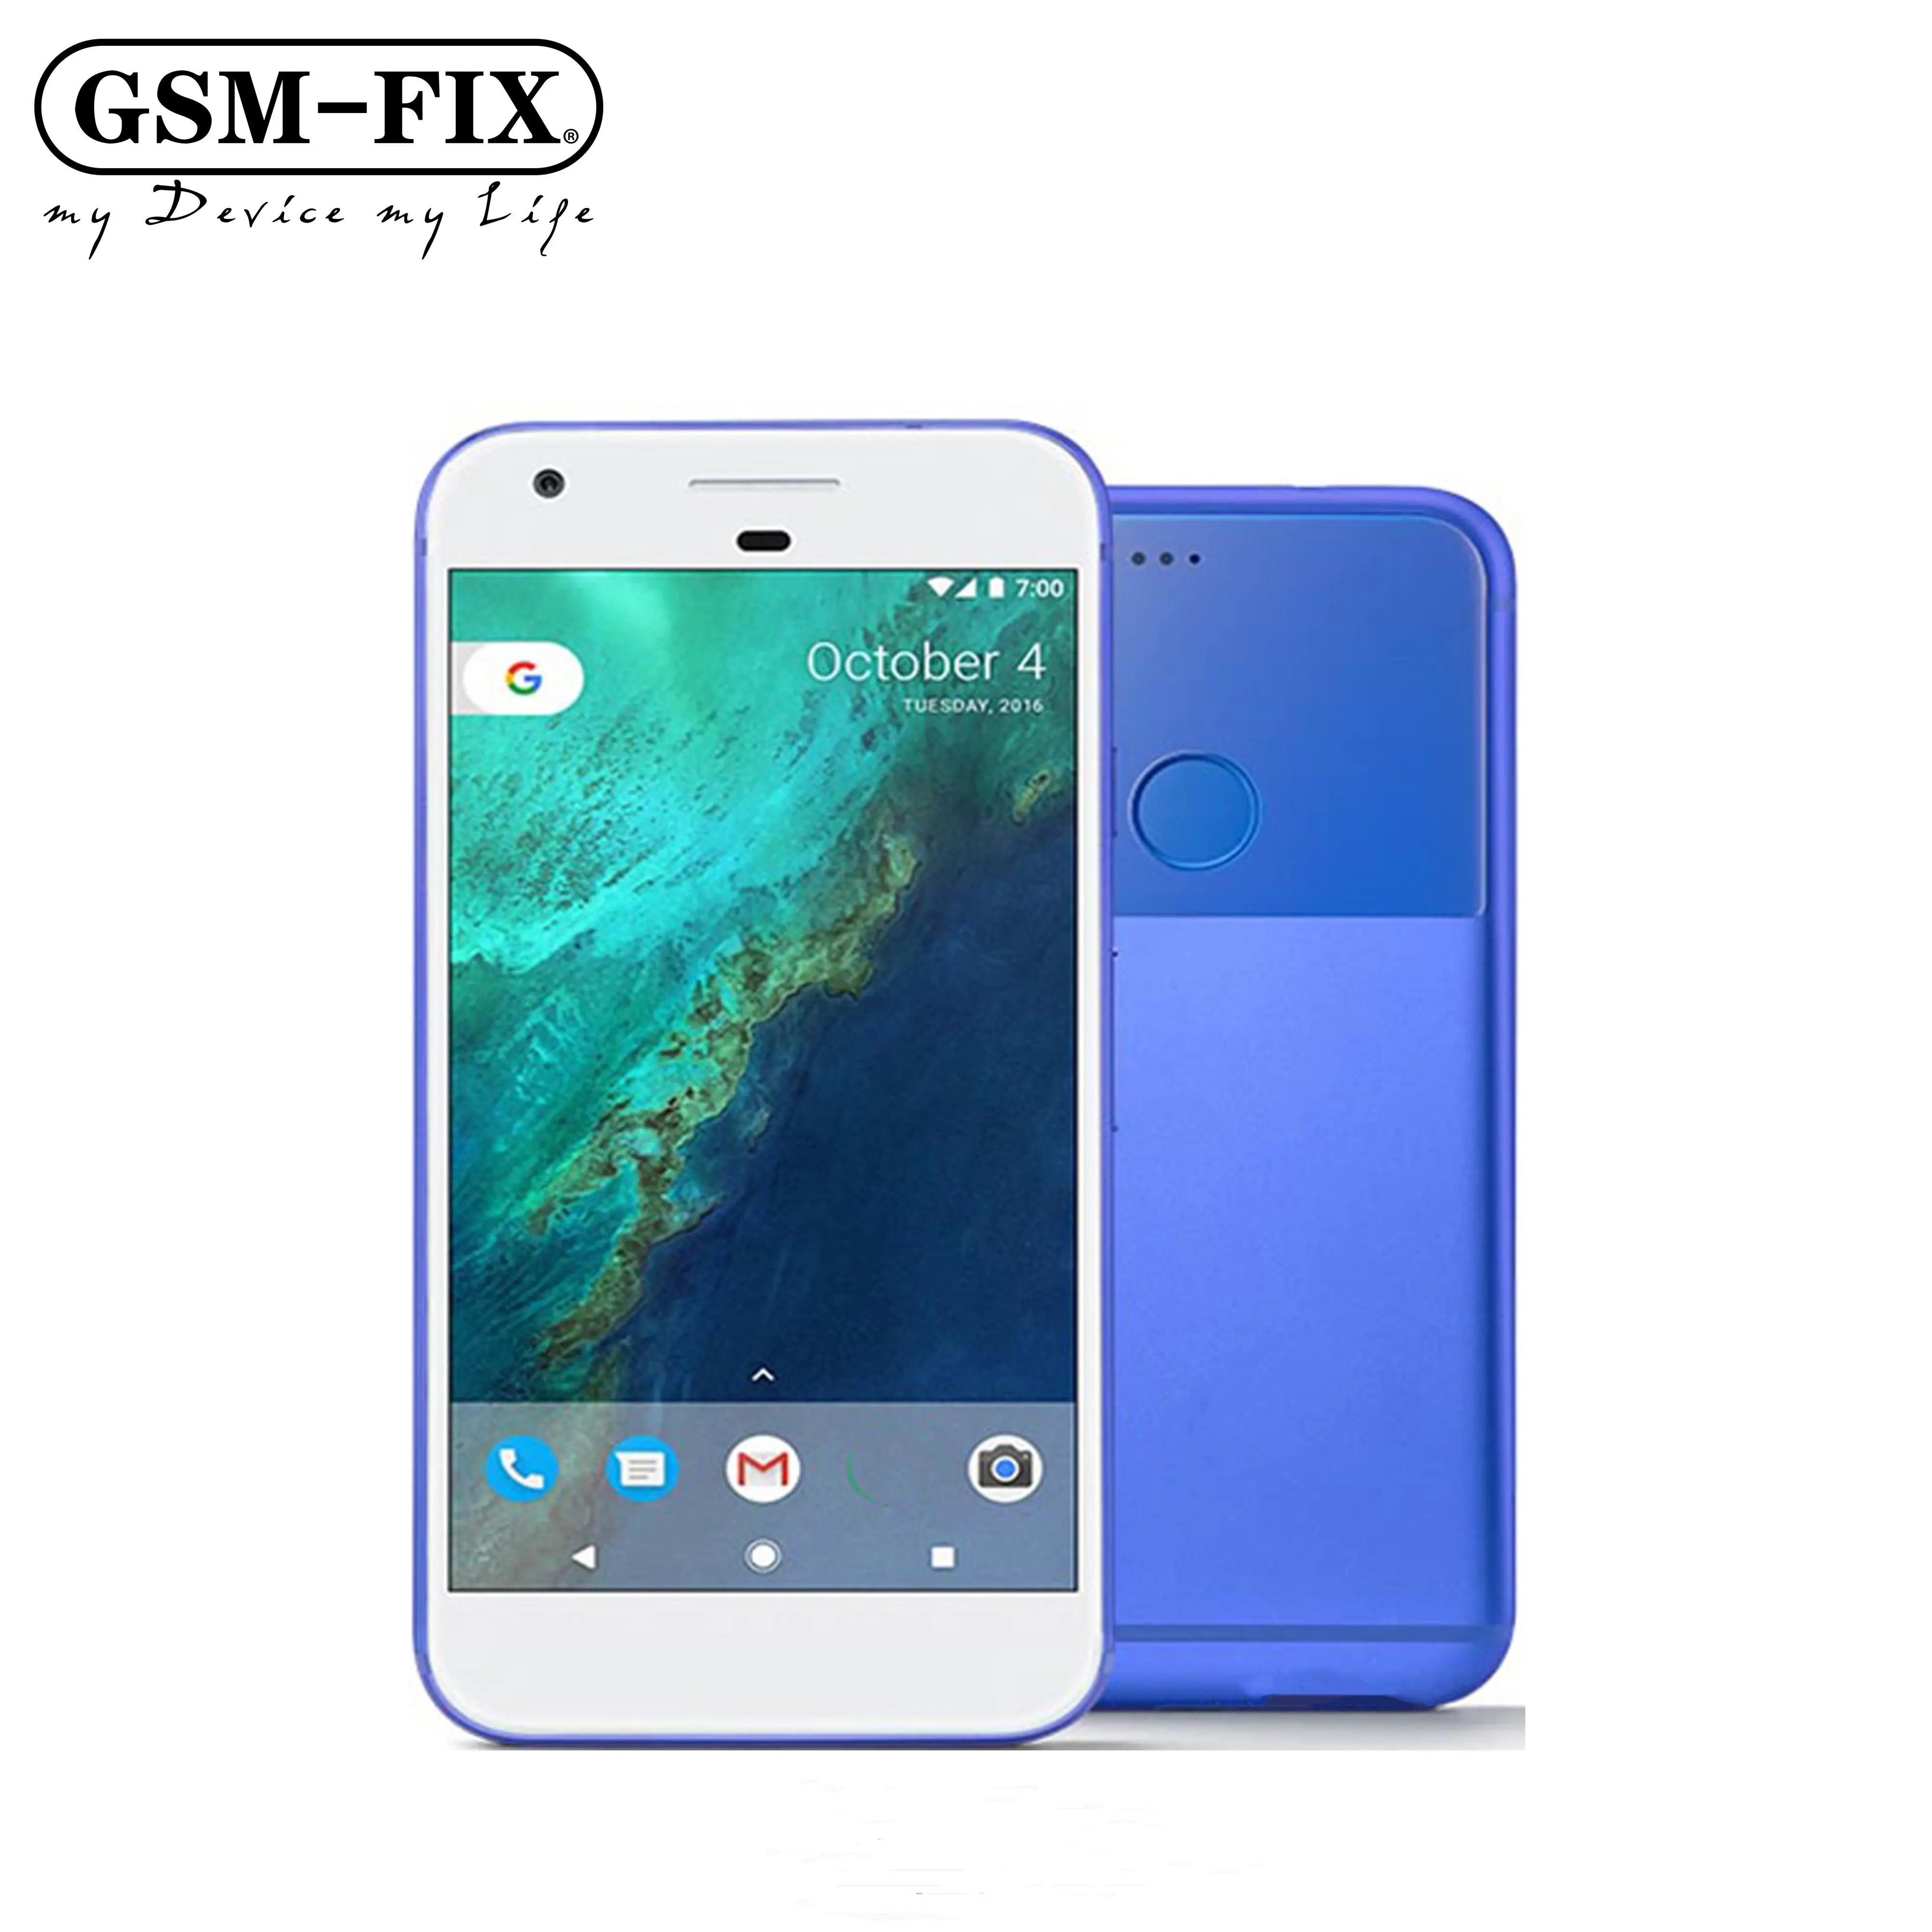 GSM-FIX For Google Pixel X Mobile Phone 5.0" 4GB RAM 32&128GB ROM 12MP Quad Core 4G LTE Original Android Smartphone